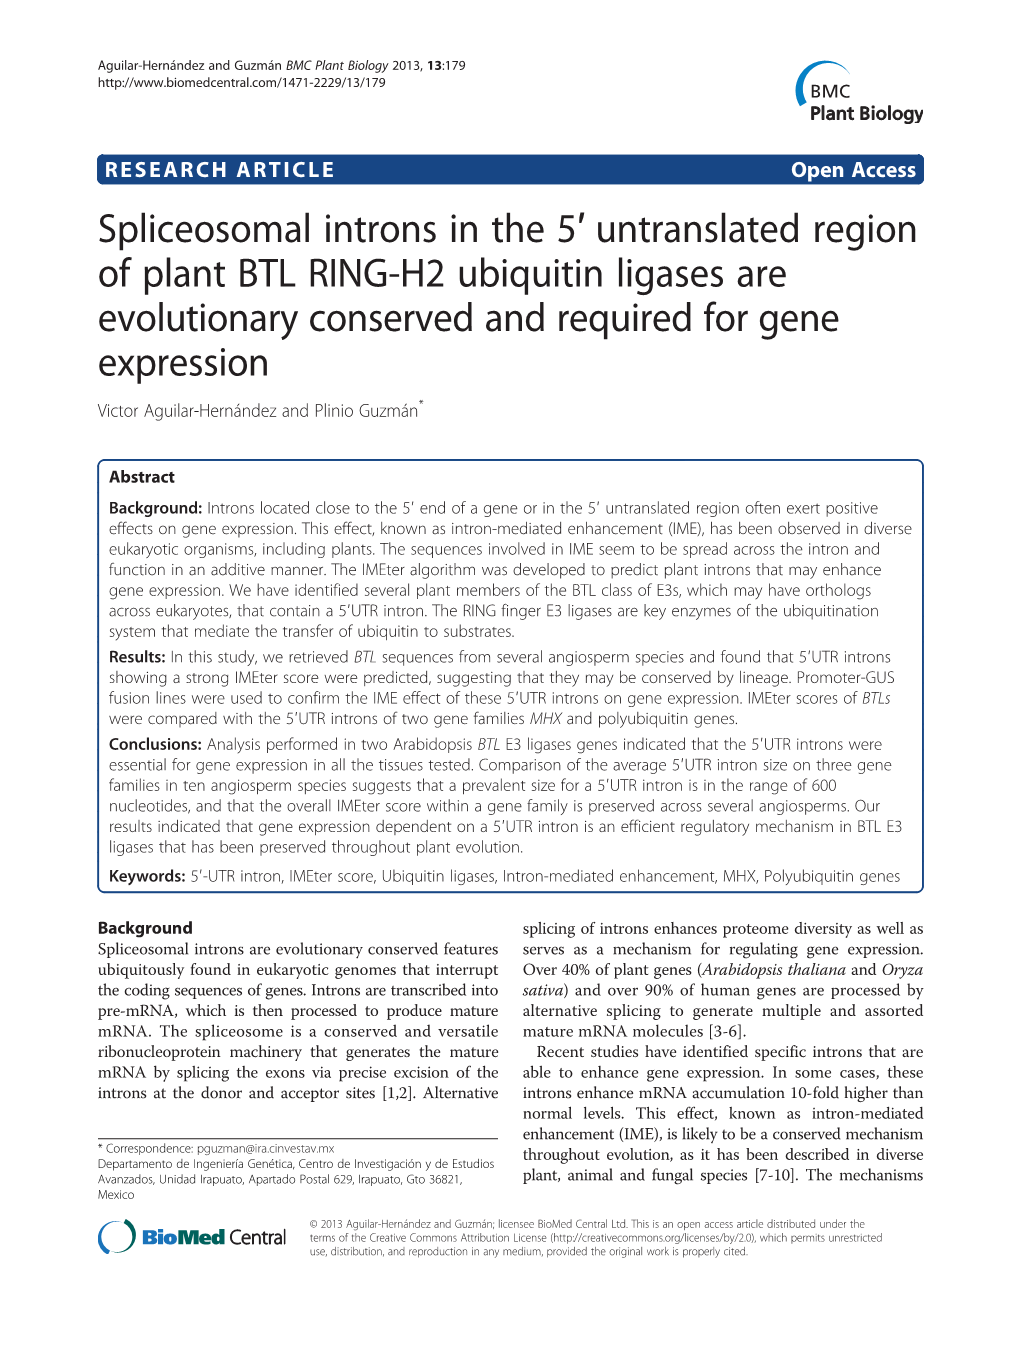 Spliceosomal Introns in the 5′ Untranslated Region of Plant BTL